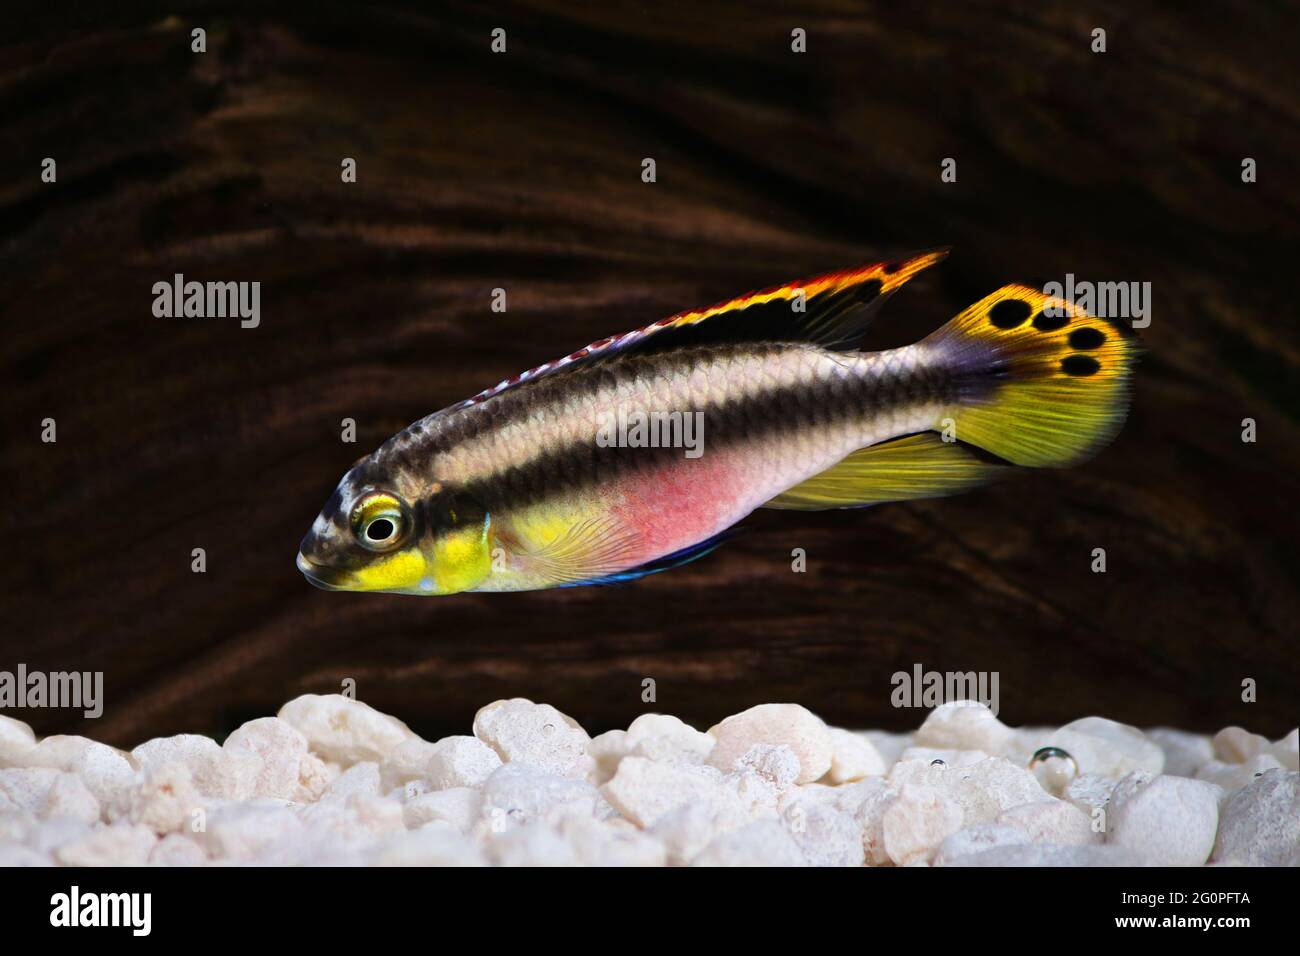 Male Pelvicachromis pulcher kribensis cichlid Aquarium fish isolated on white Stock Photo